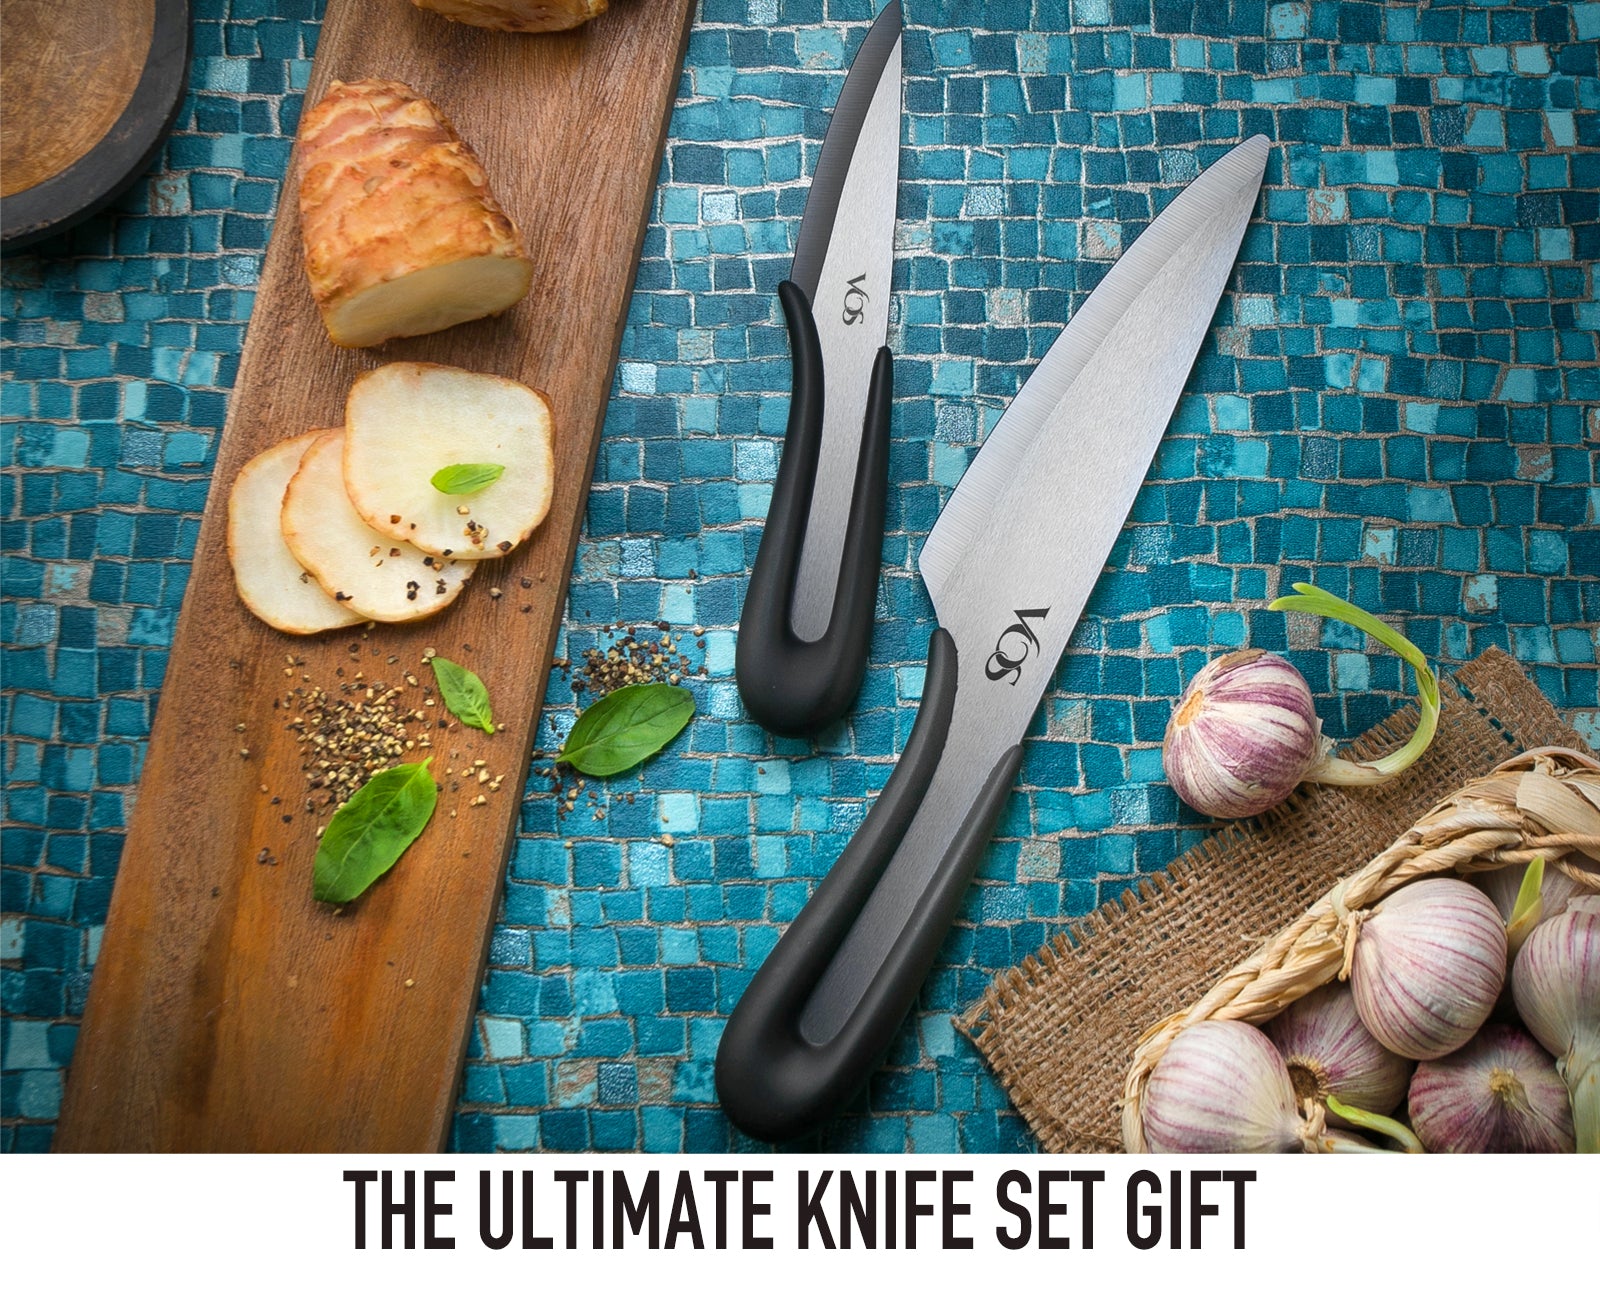 Ceramic 4 Pcs Knife Set with Knives Holder - Red – Vosknife